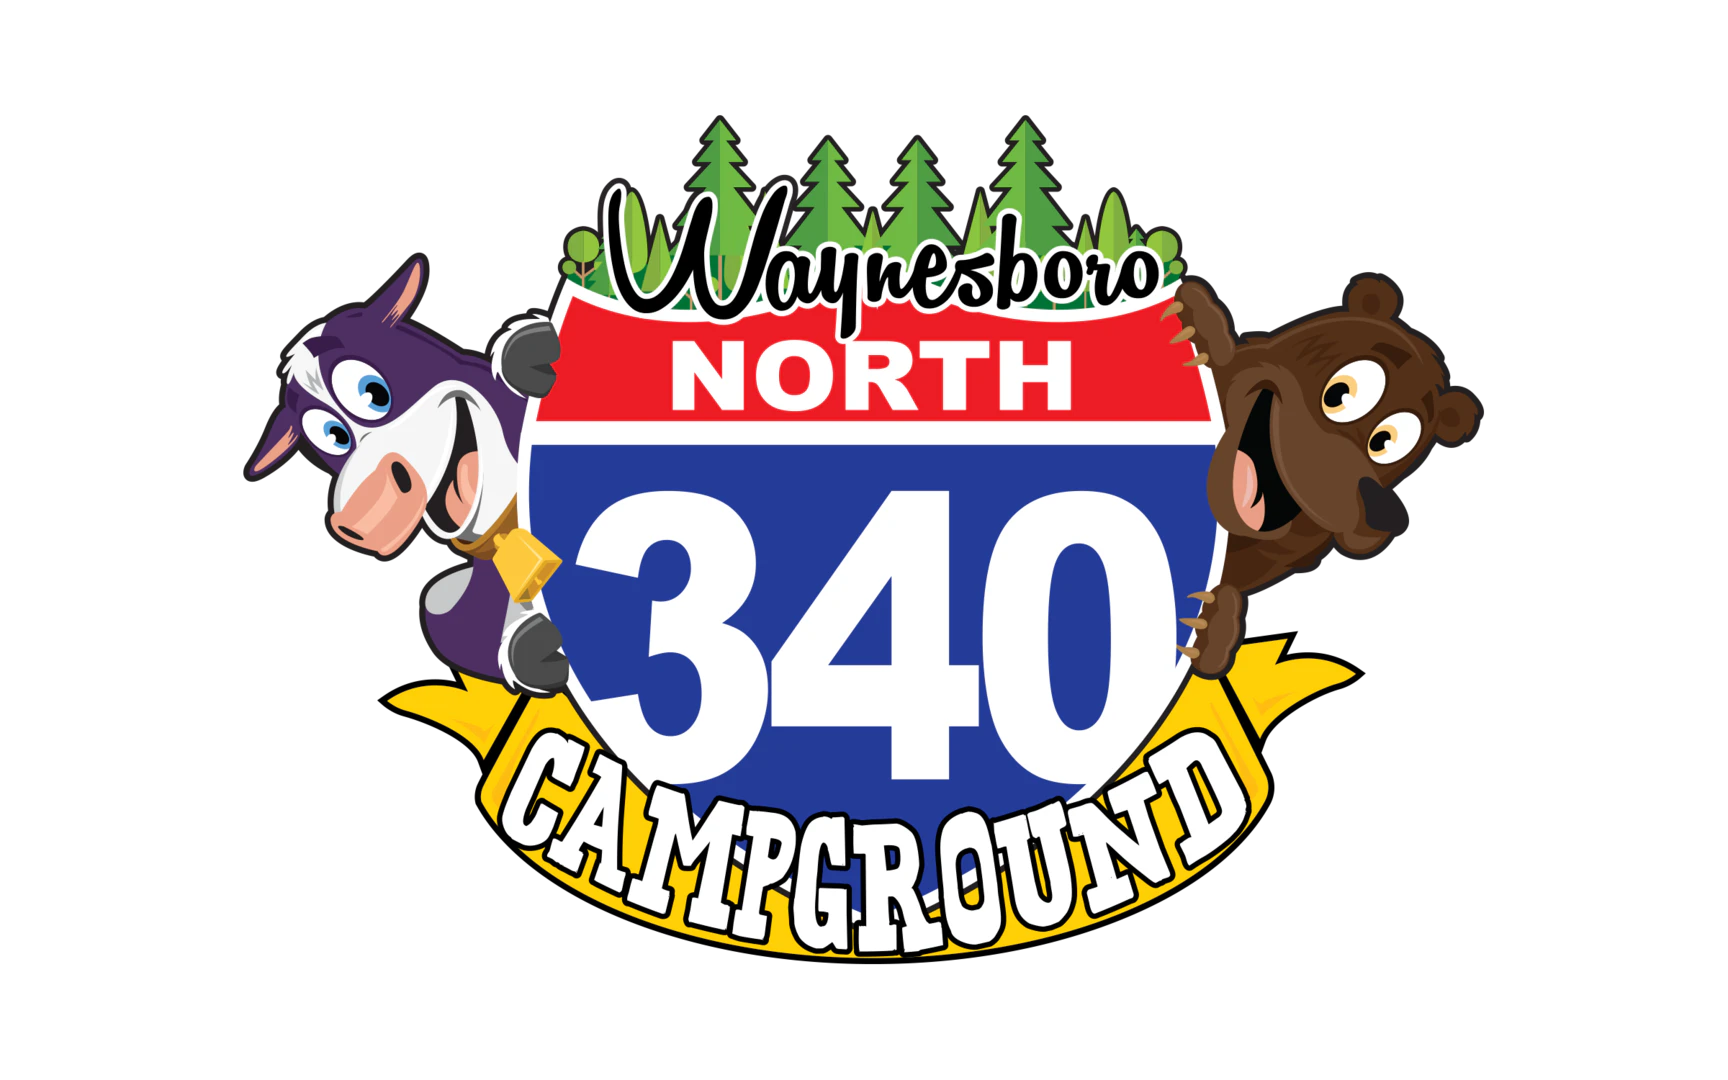 Waynesboro North 340 Campground - Get Outdoors - Camping